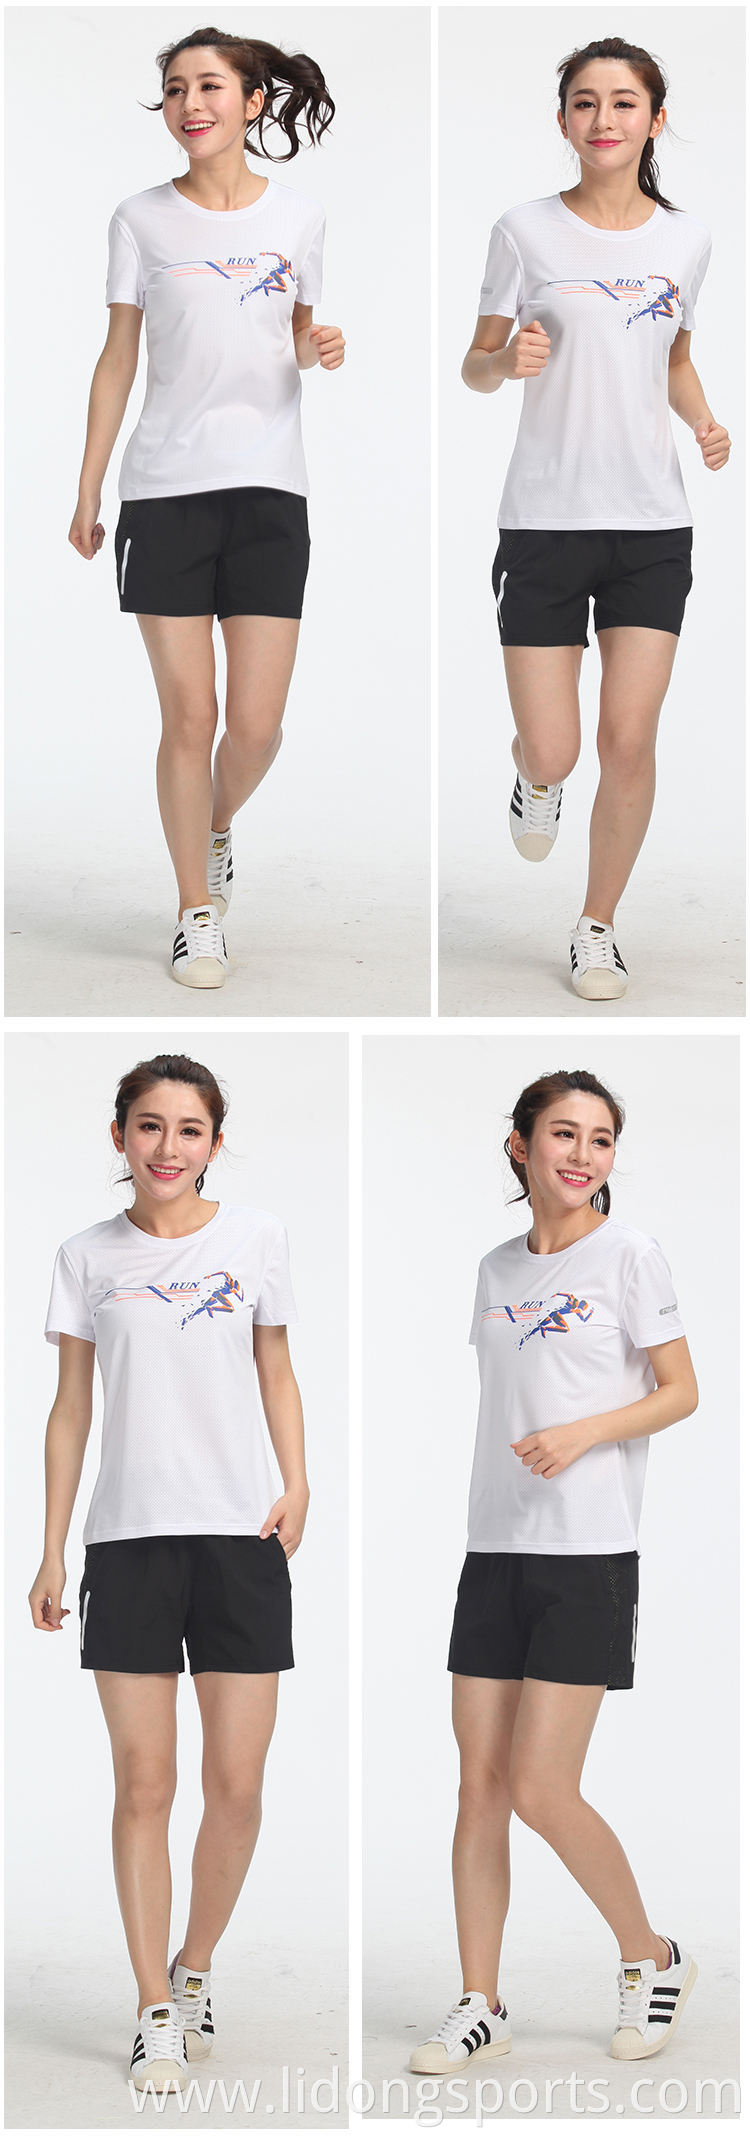 LiDong wholesale t shirts short sleeve printed t shirt custom print t shirt for men